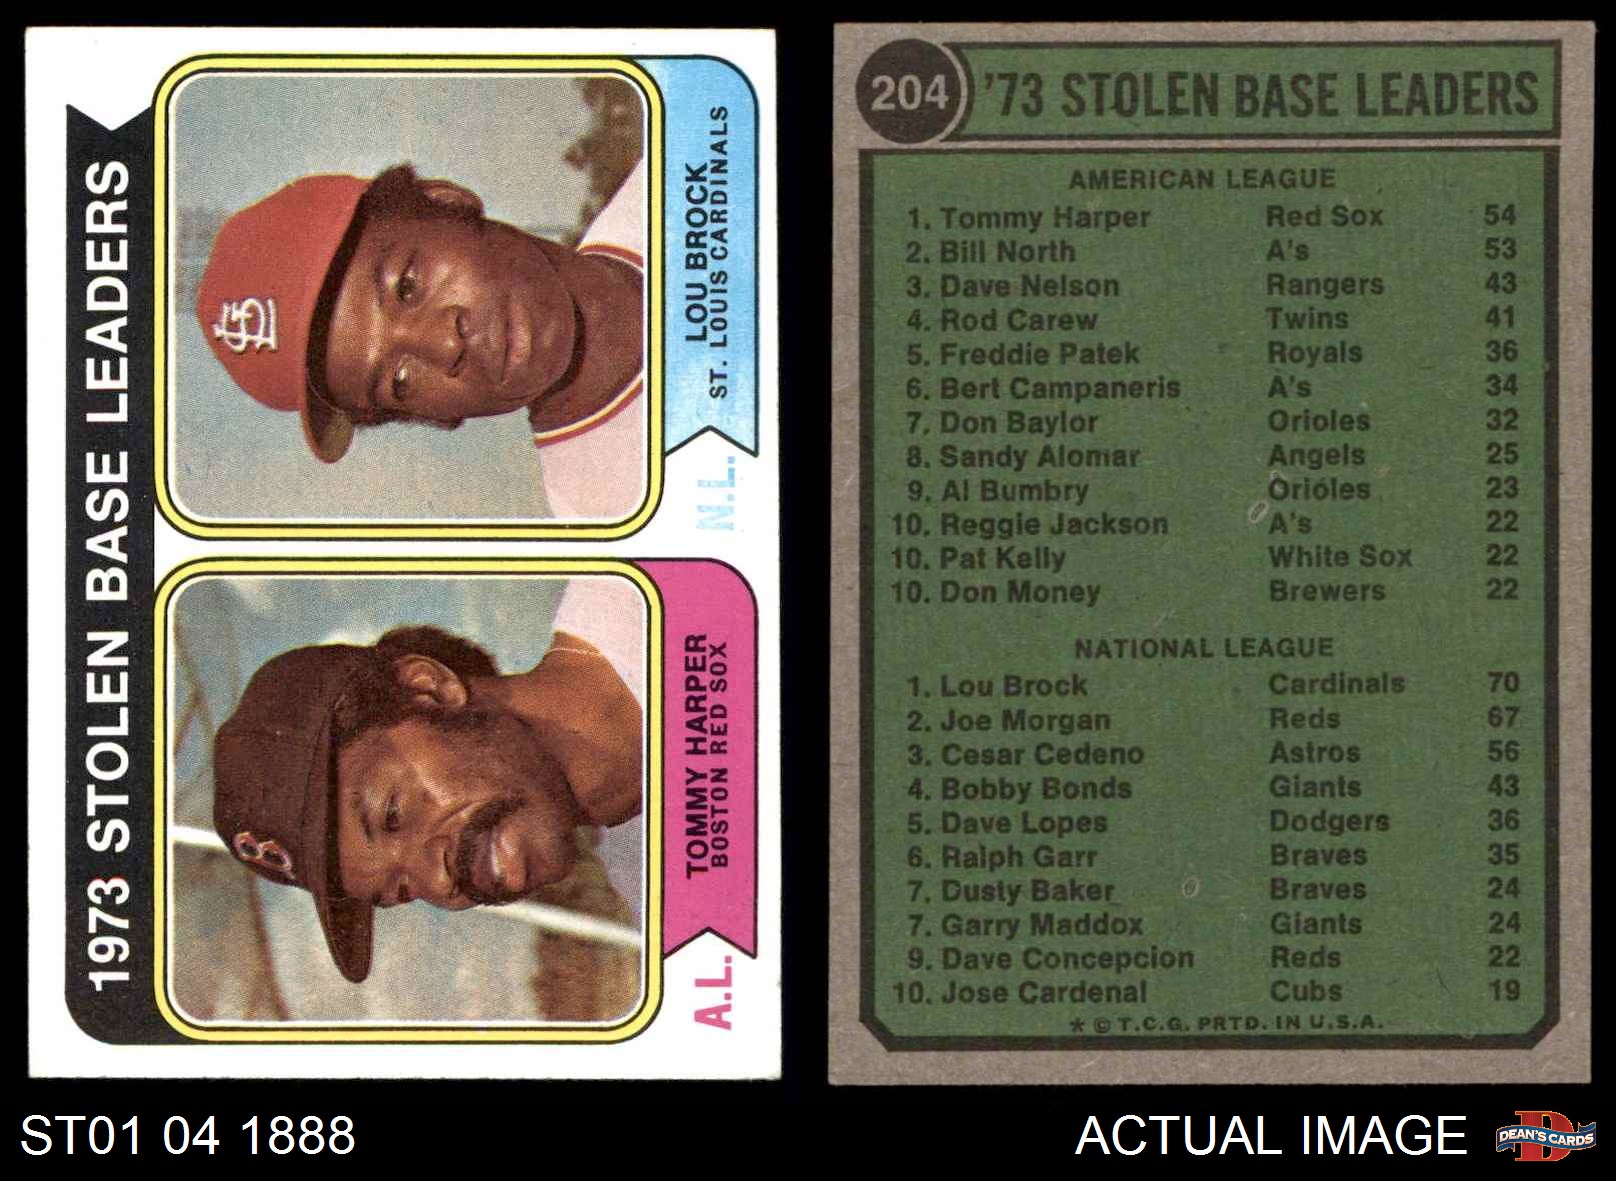 1974 Topps #204 1973 Stolen Base Leaders Tommy Harper Lou Brock Boston Red Sox 